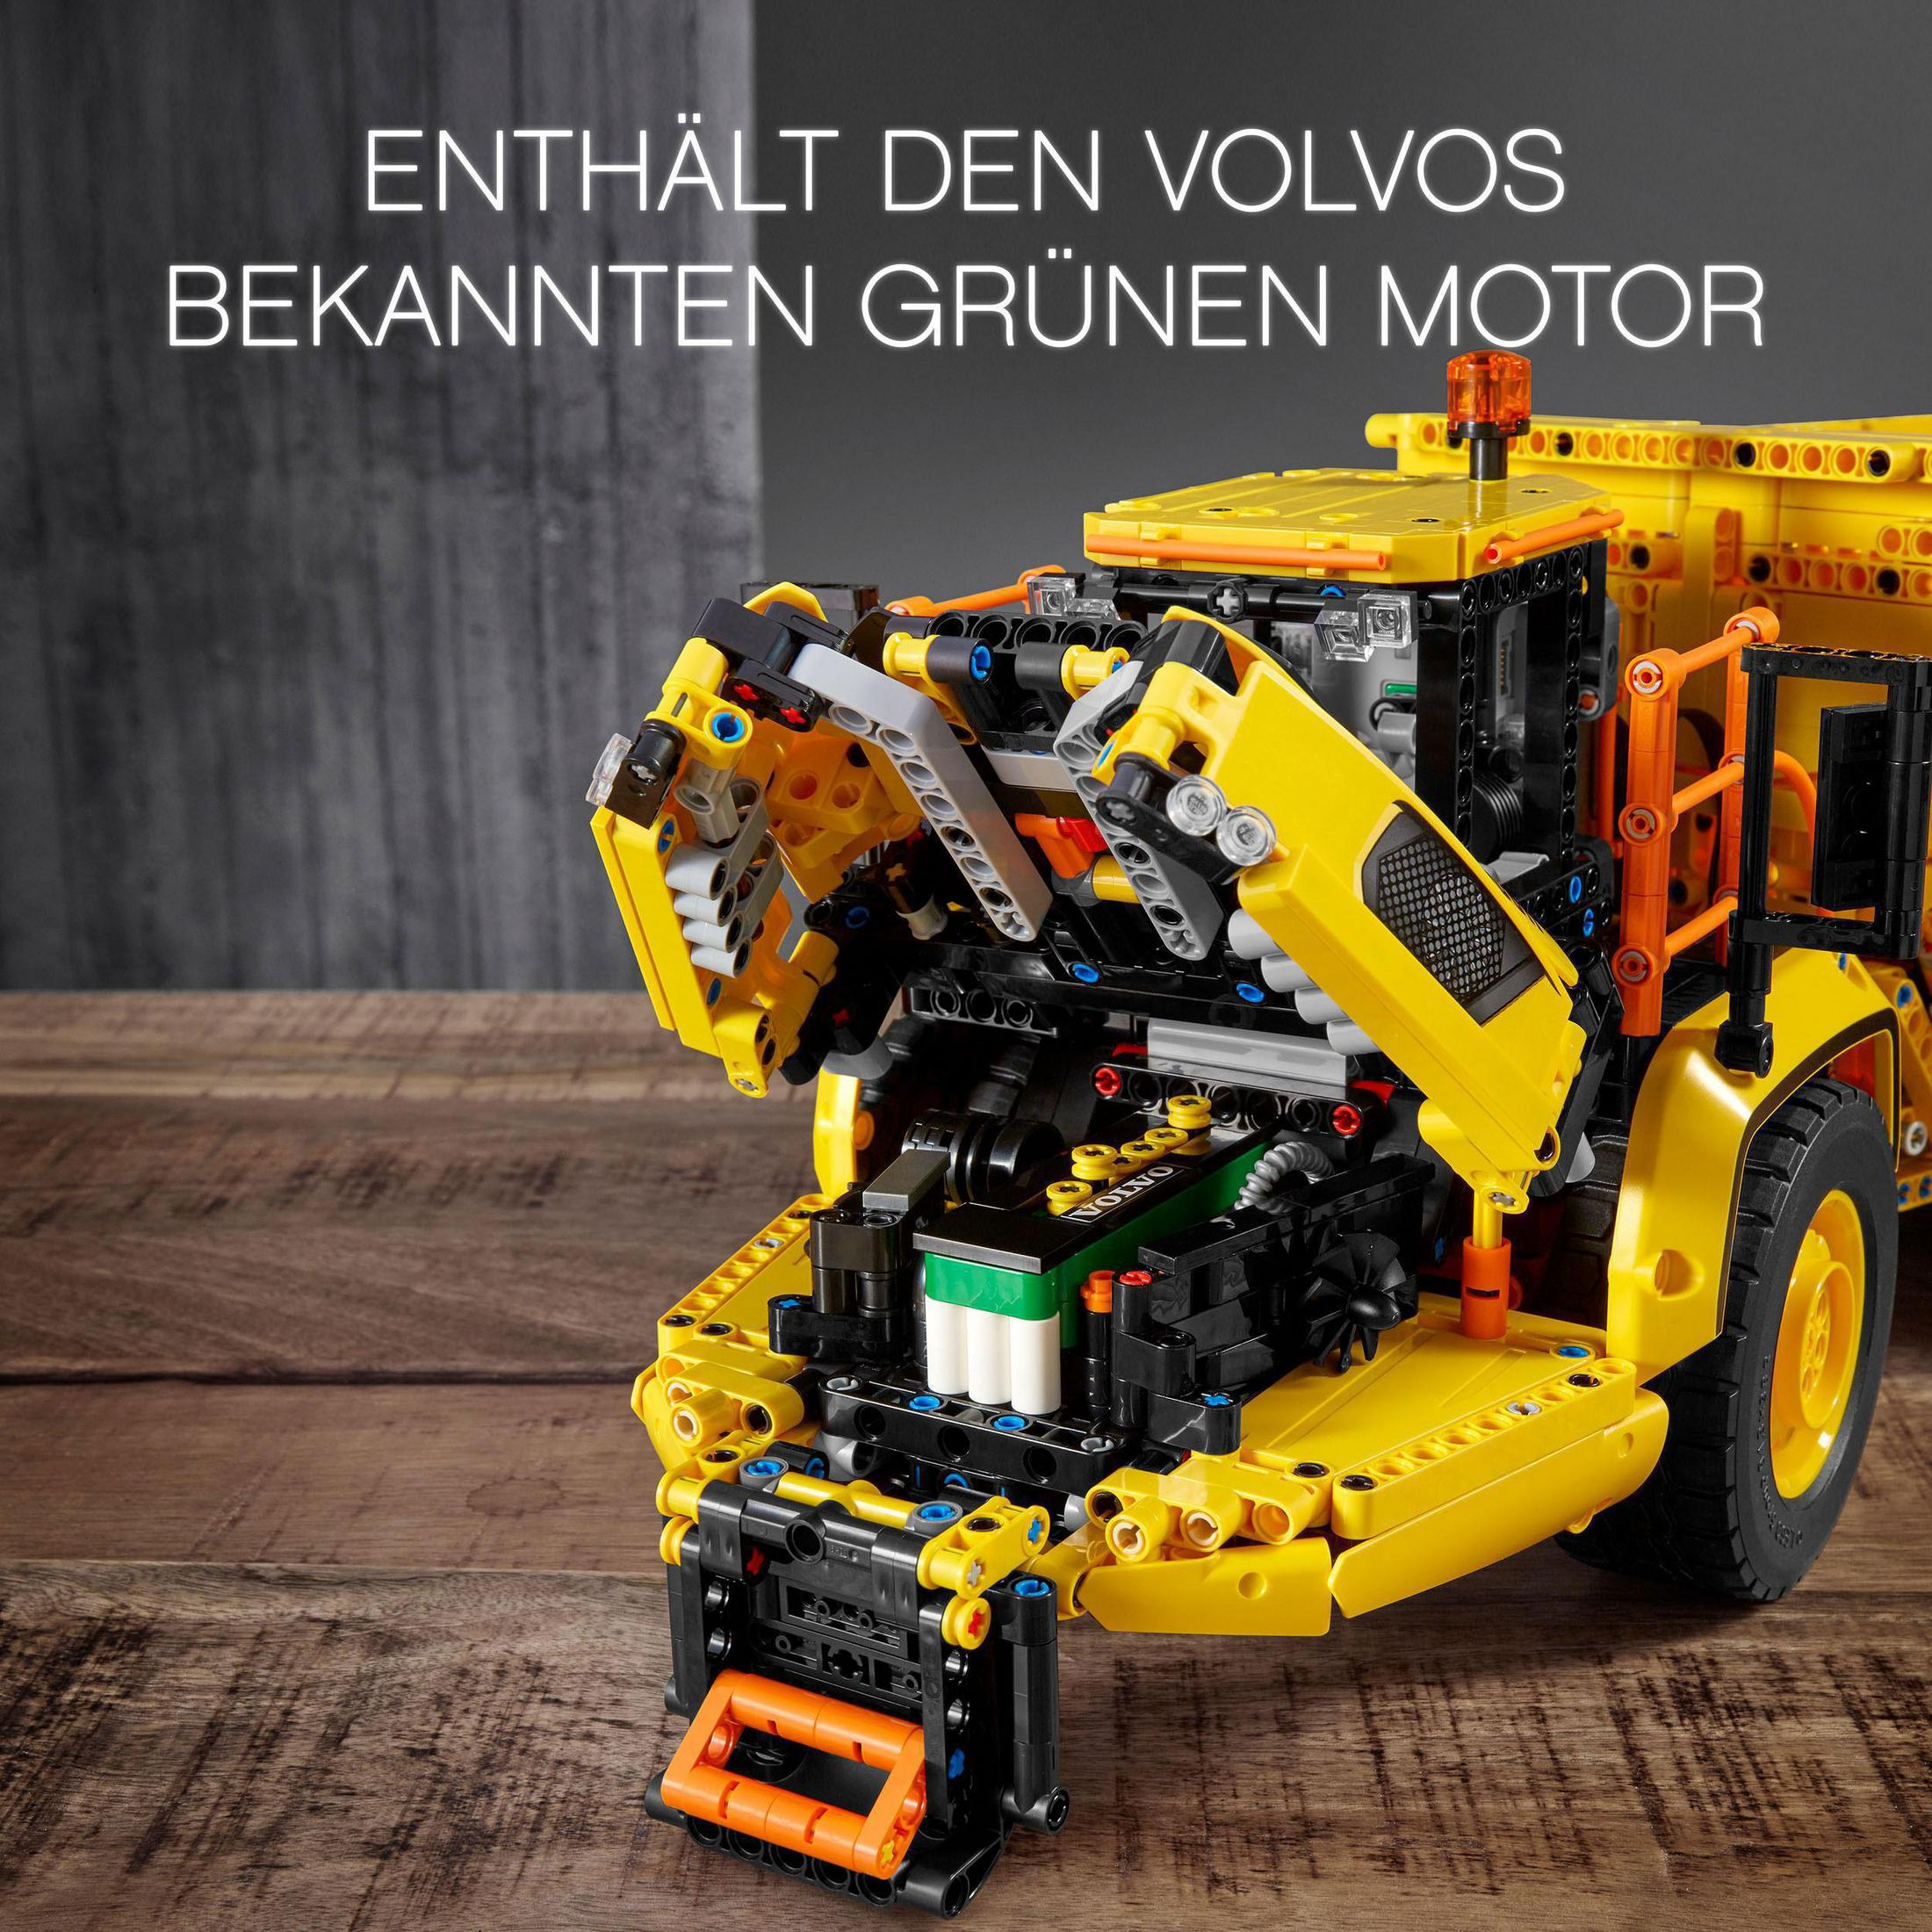 Bausatz, (6X6) 42114 VOLVO-DUMPER LEGO KNICKGELENKTER Mehrfarbig